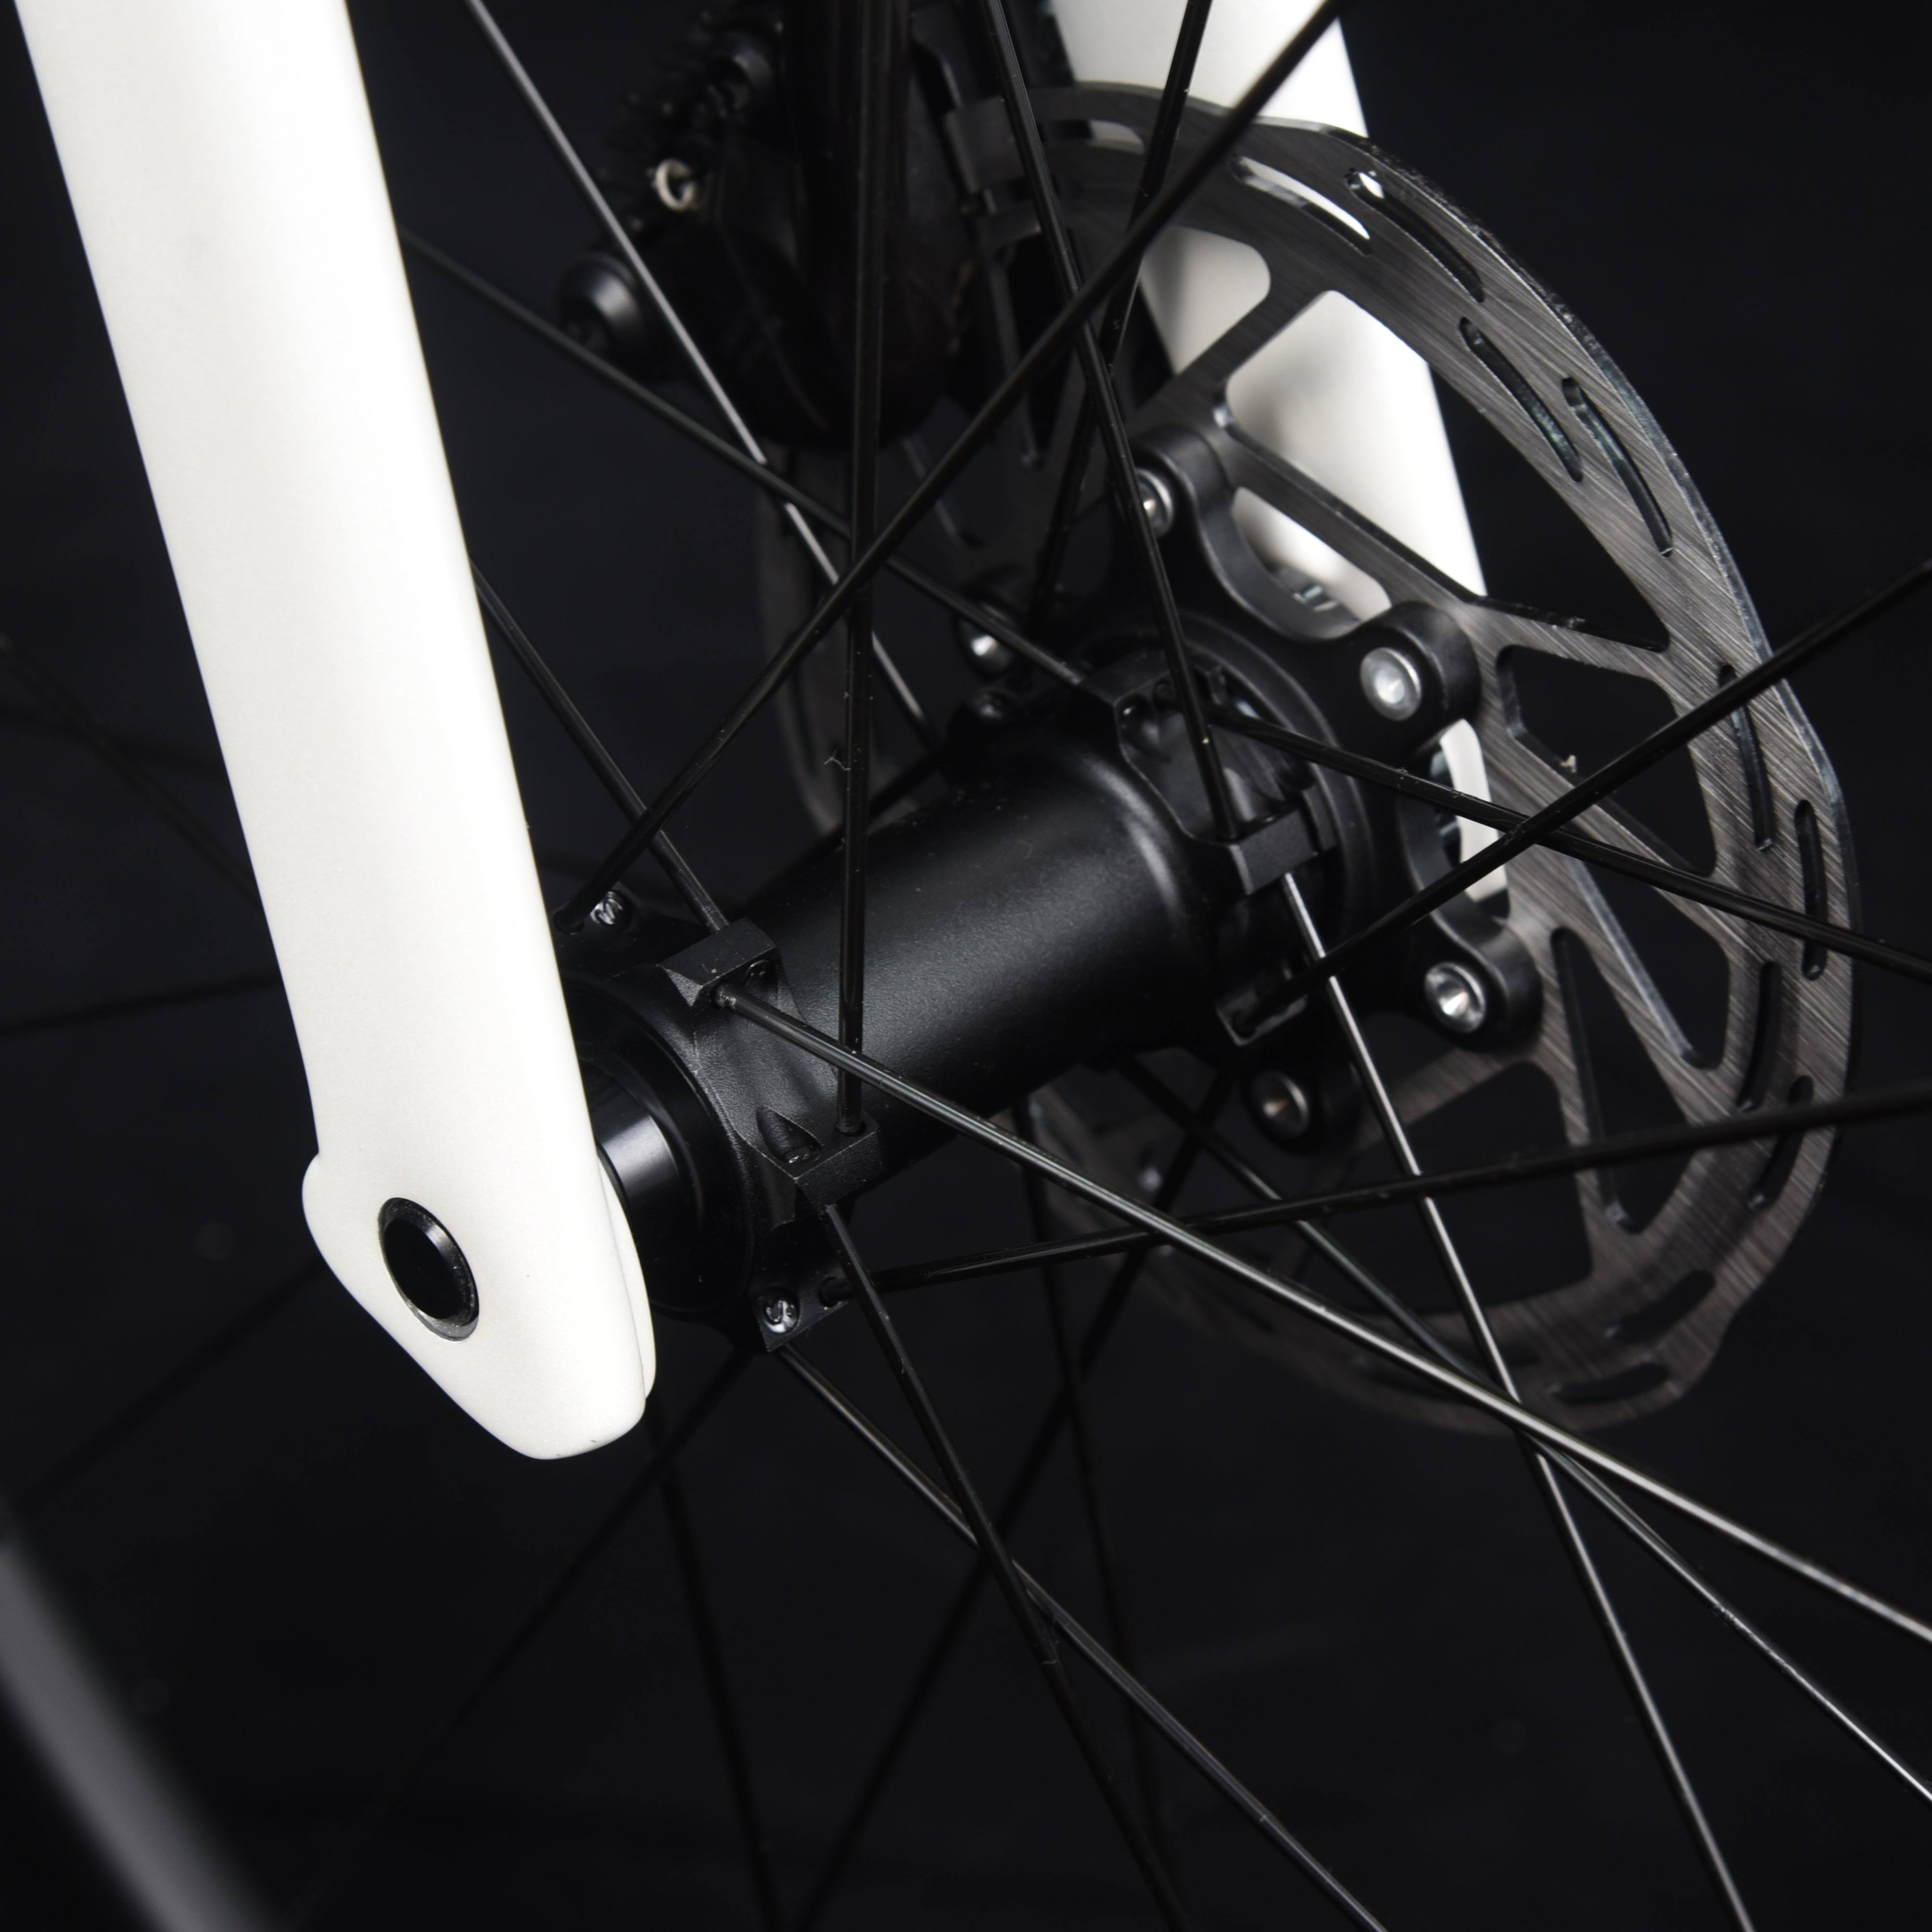 Bicicleta de carretera SAVA Streamer 8.0 íntegramente de carbono de 51 cm: oferta de liquidación